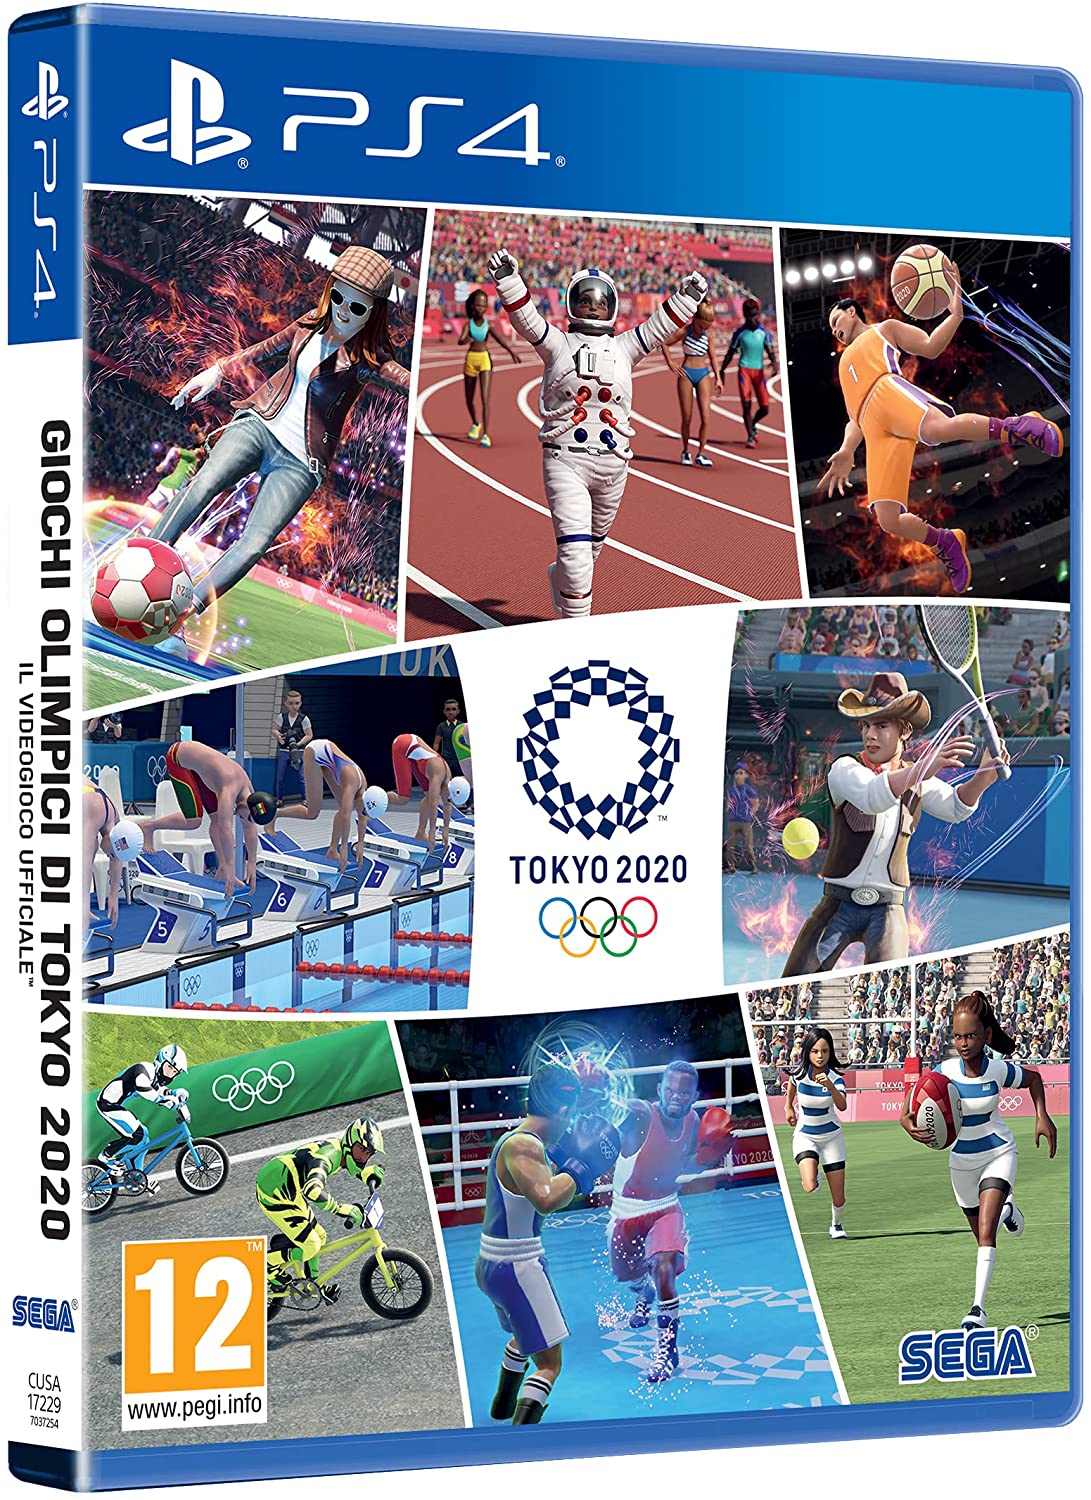 proposte a tema Tokyo 2020 - ps4 gioco